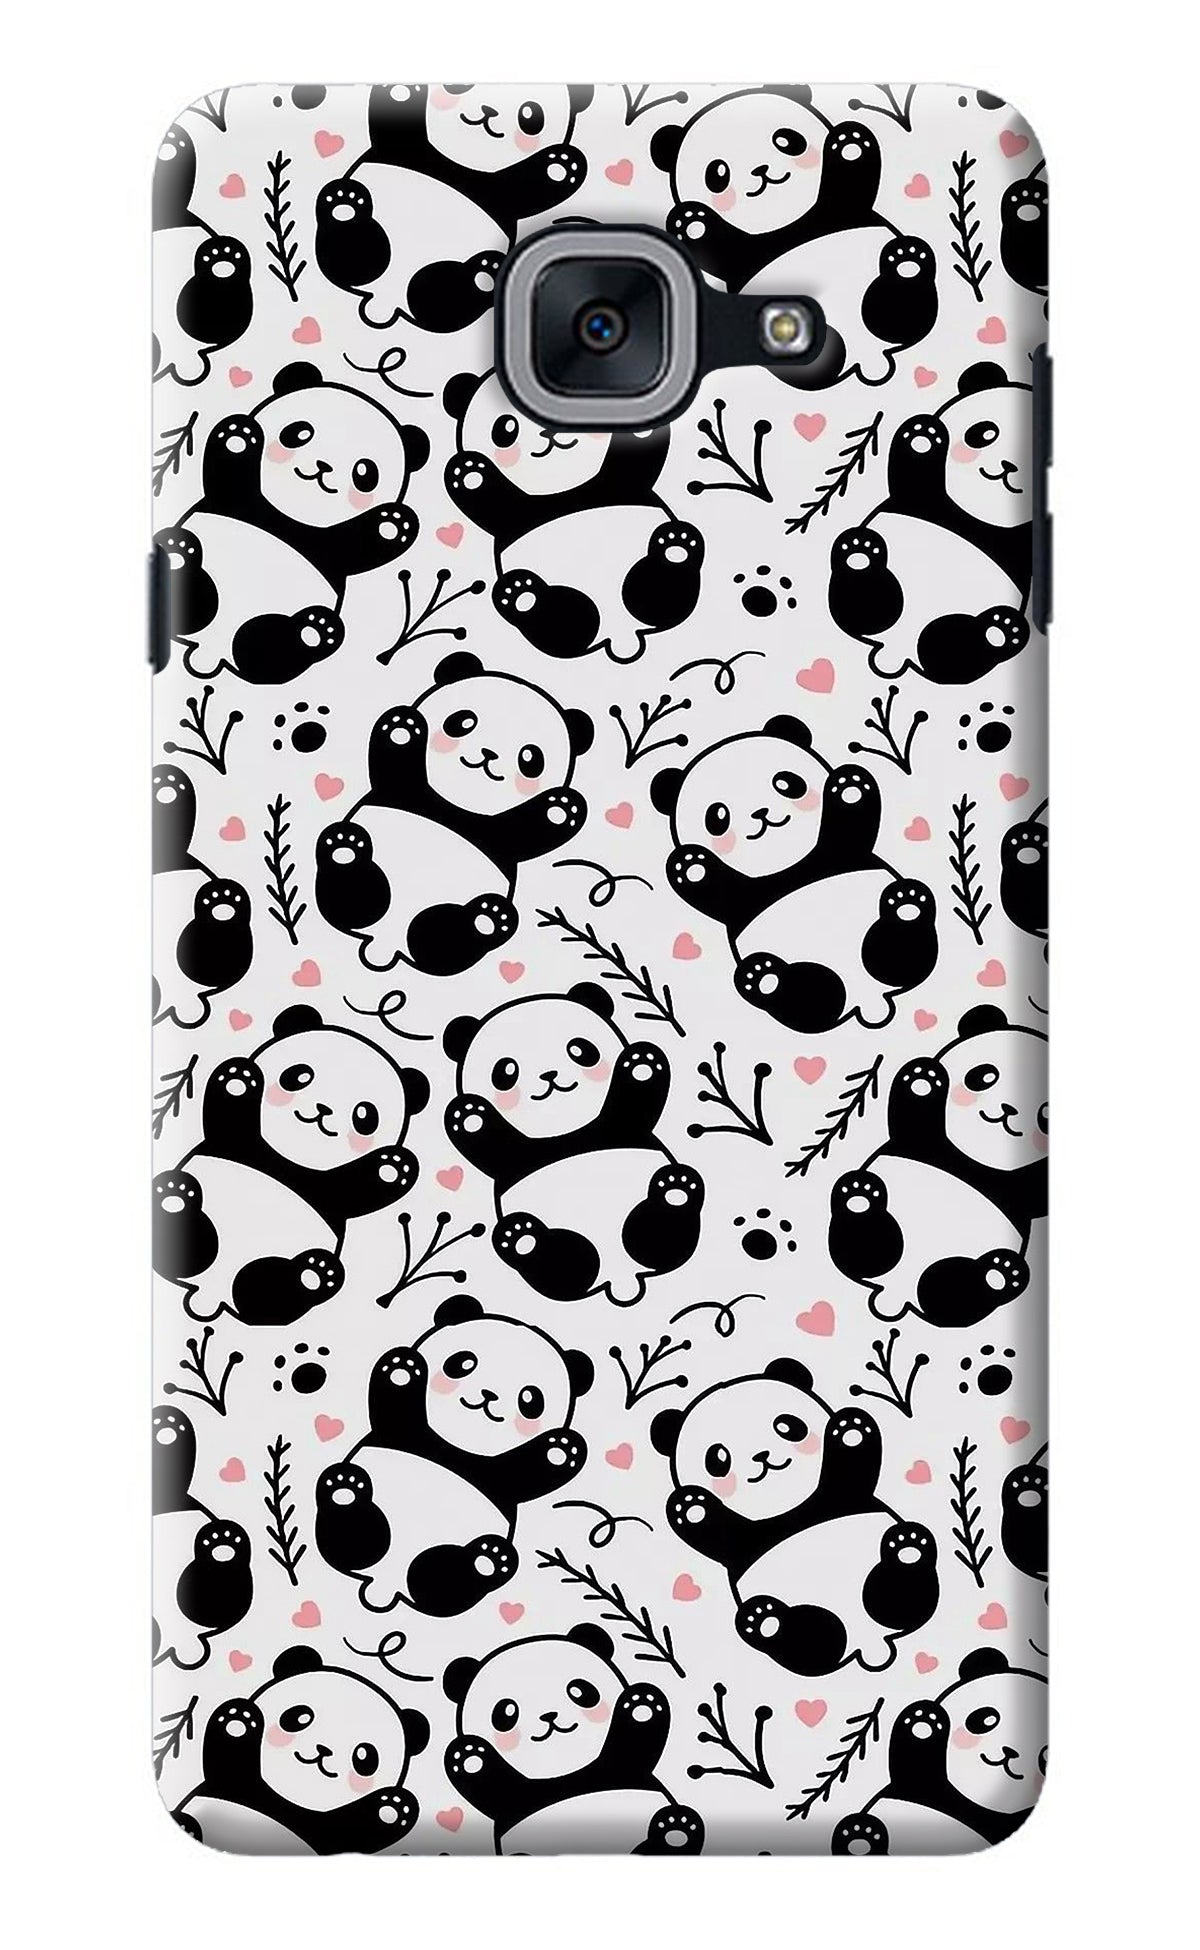 Cute Panda Samsung J7 Max Back Cover